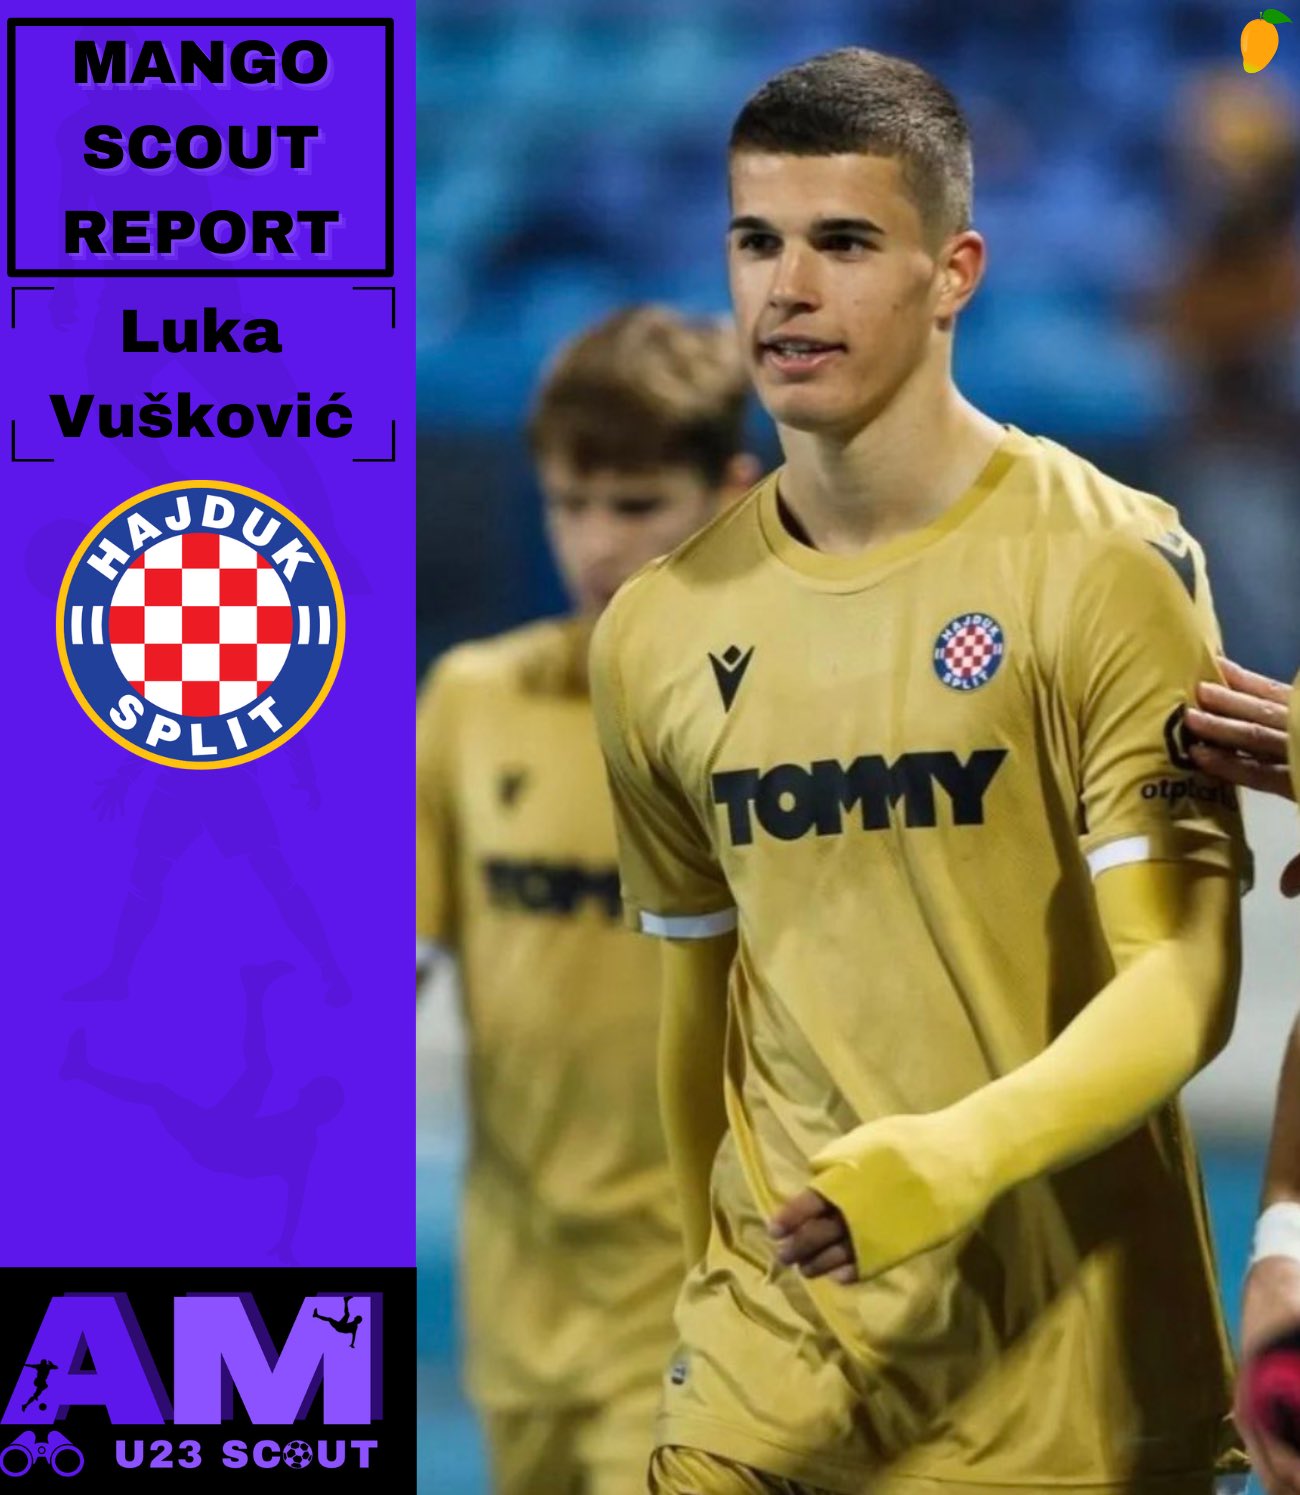 Scheda Hajduk Spalato U19 - Primavera Youth League Italia